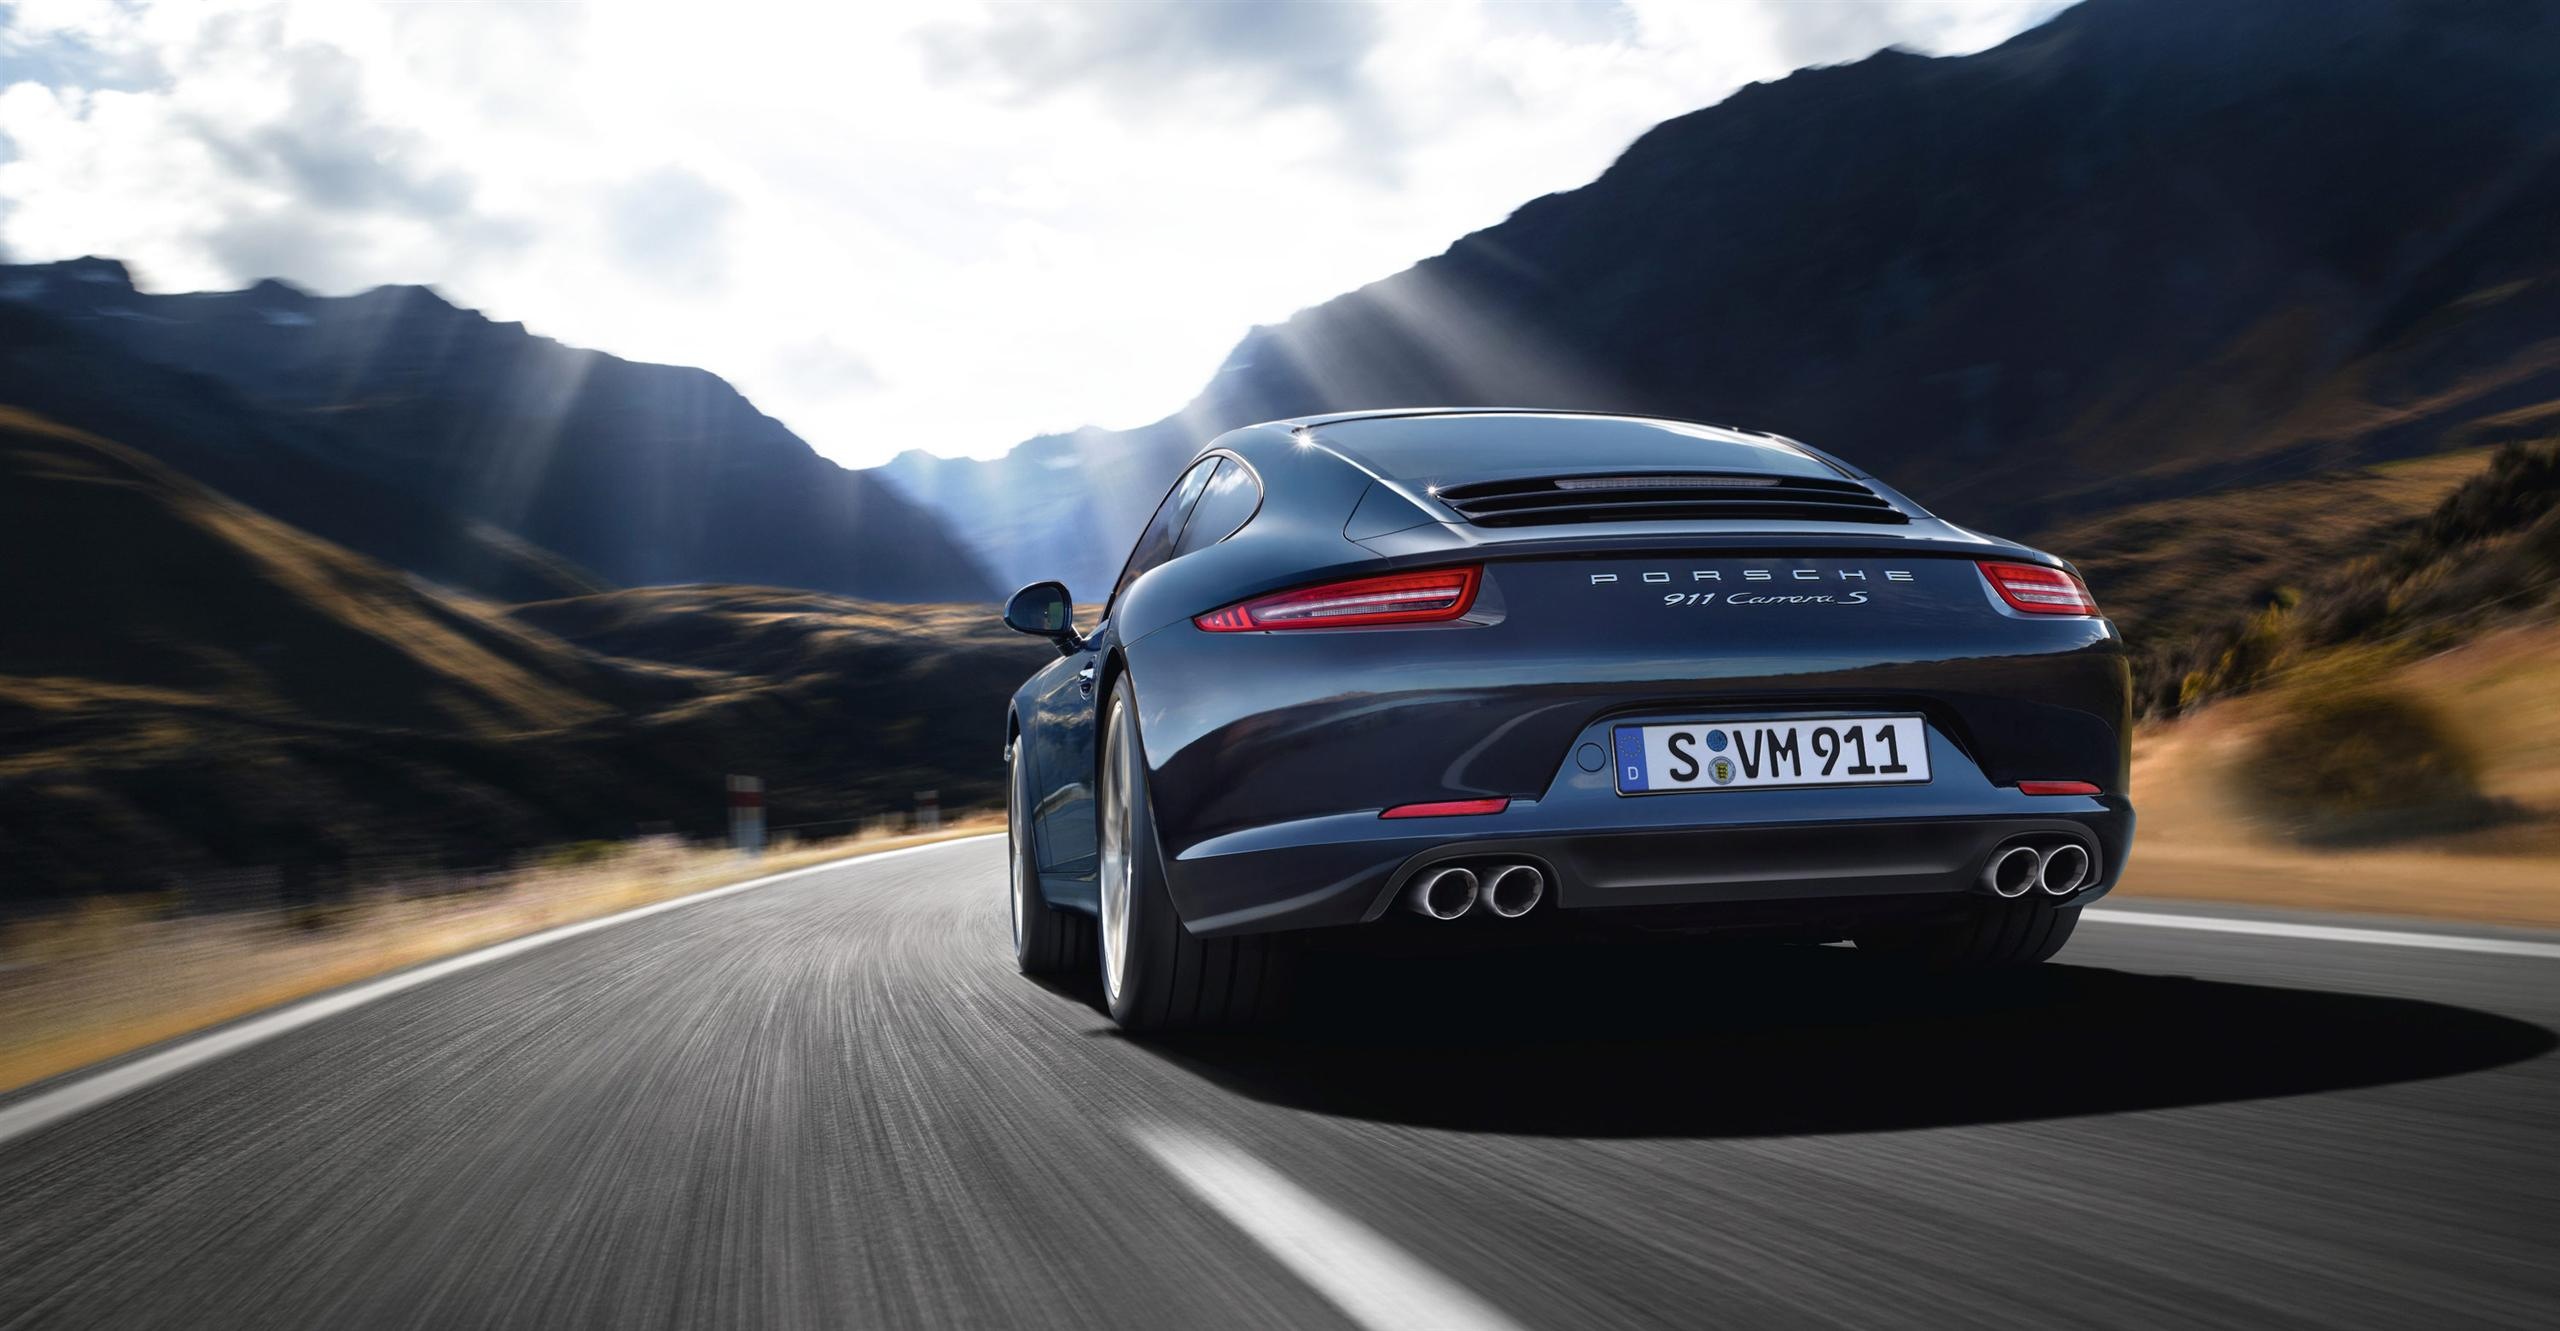 Porsche High Definition Wallpapers HD Wallpapers 1080p Cars